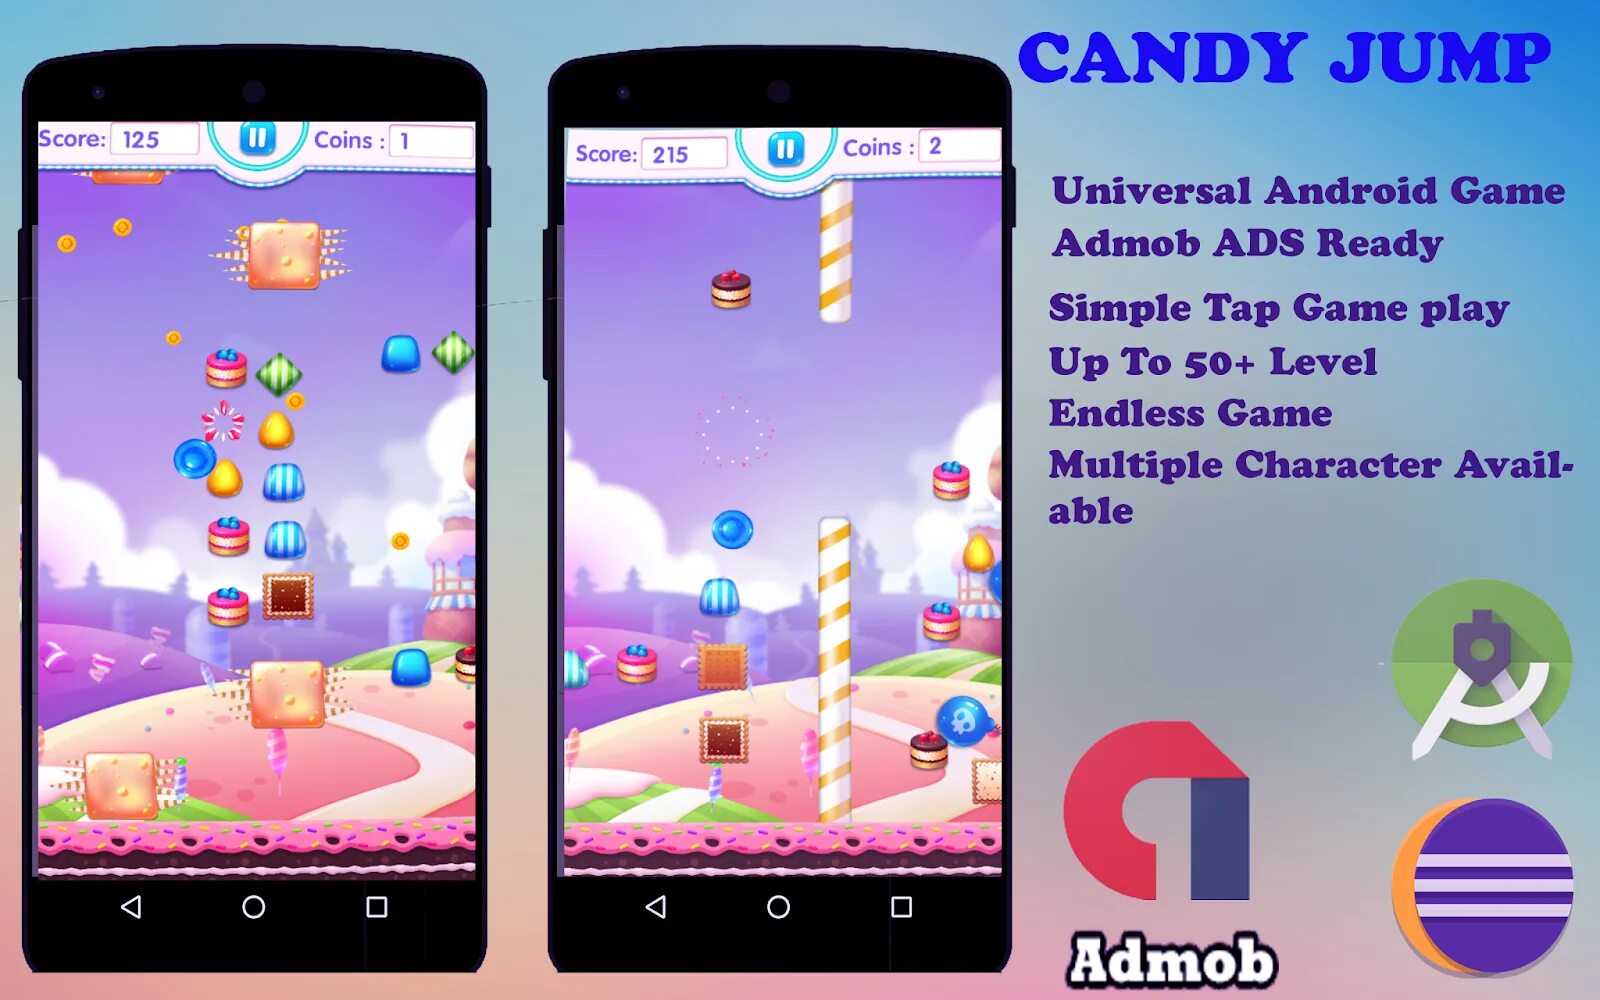 Android Studio игры. Примеры игр в андроид студио. Android Studio game activity. Студия игр Blue Android. Android studio games